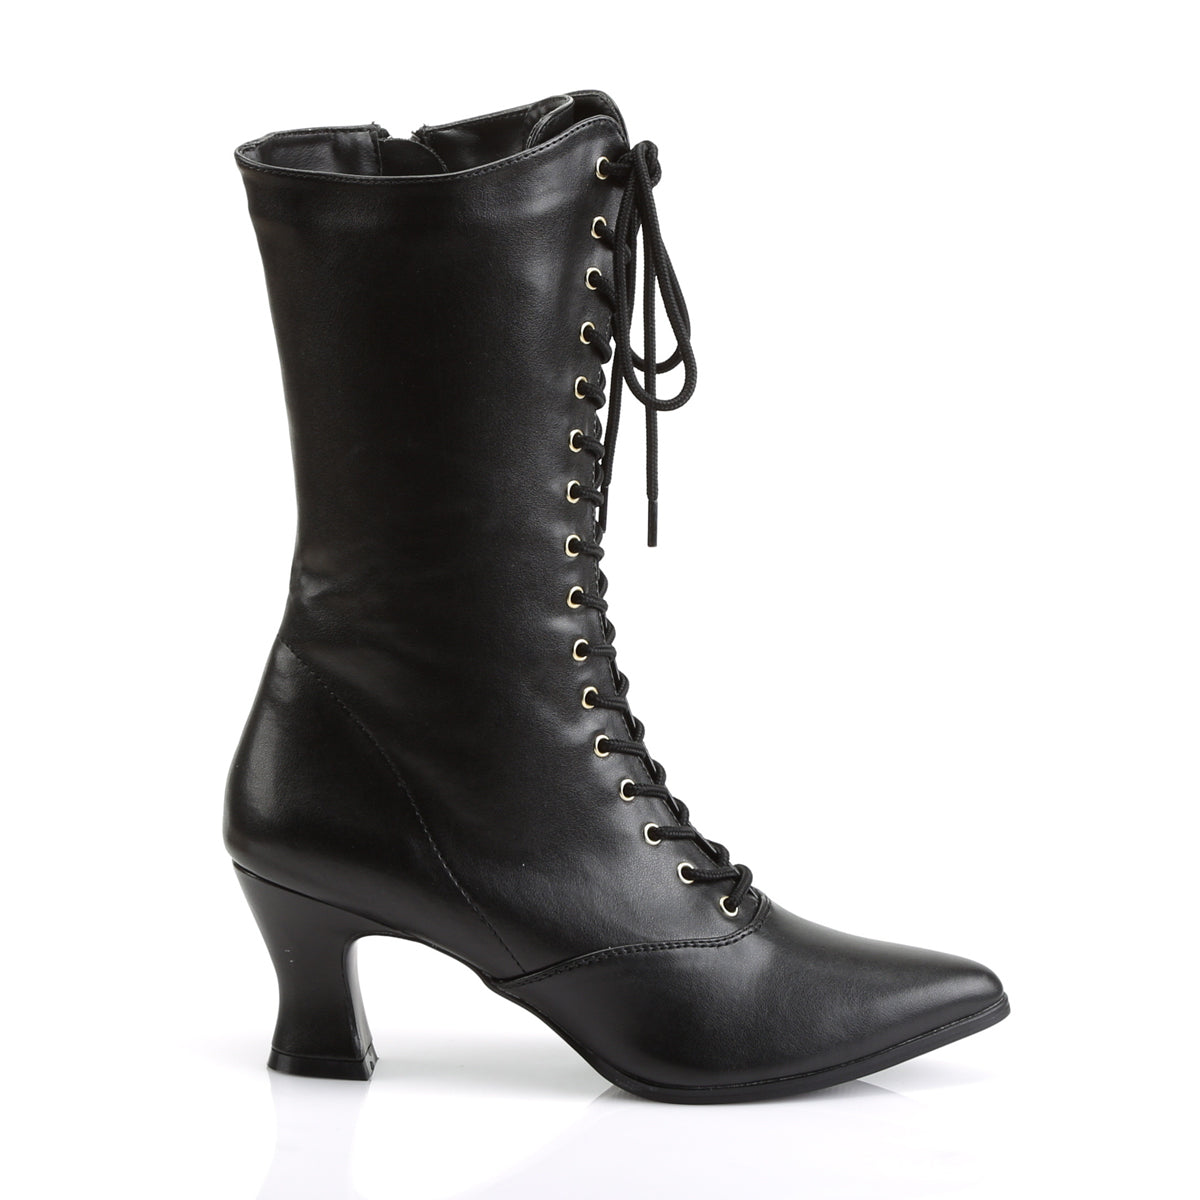 VICTORIAN-120 3 Inch Heel Black Women's Boots Funtasma Costume Shoes Fancy Dress